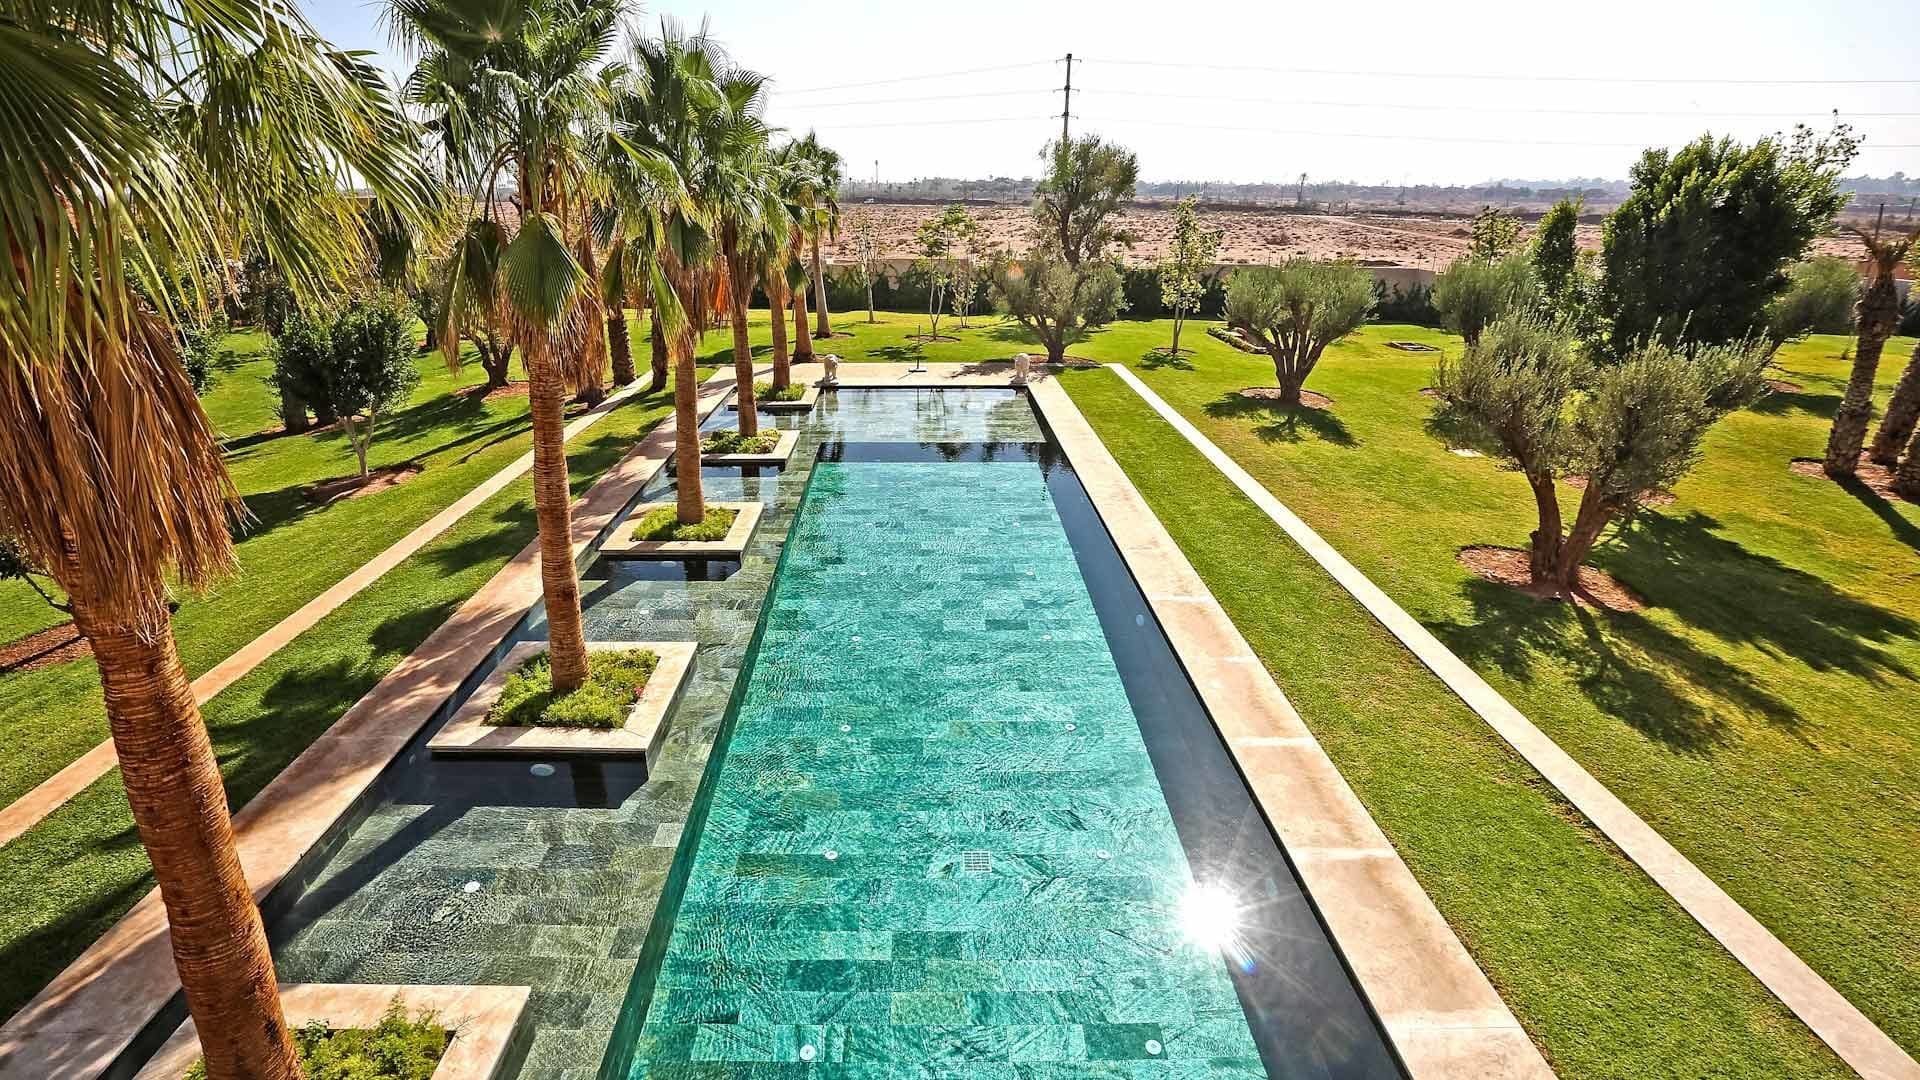 6 Bedroom Villa For Sale Marrakech Lp08723 2e90d46bb15d7a00.jpg